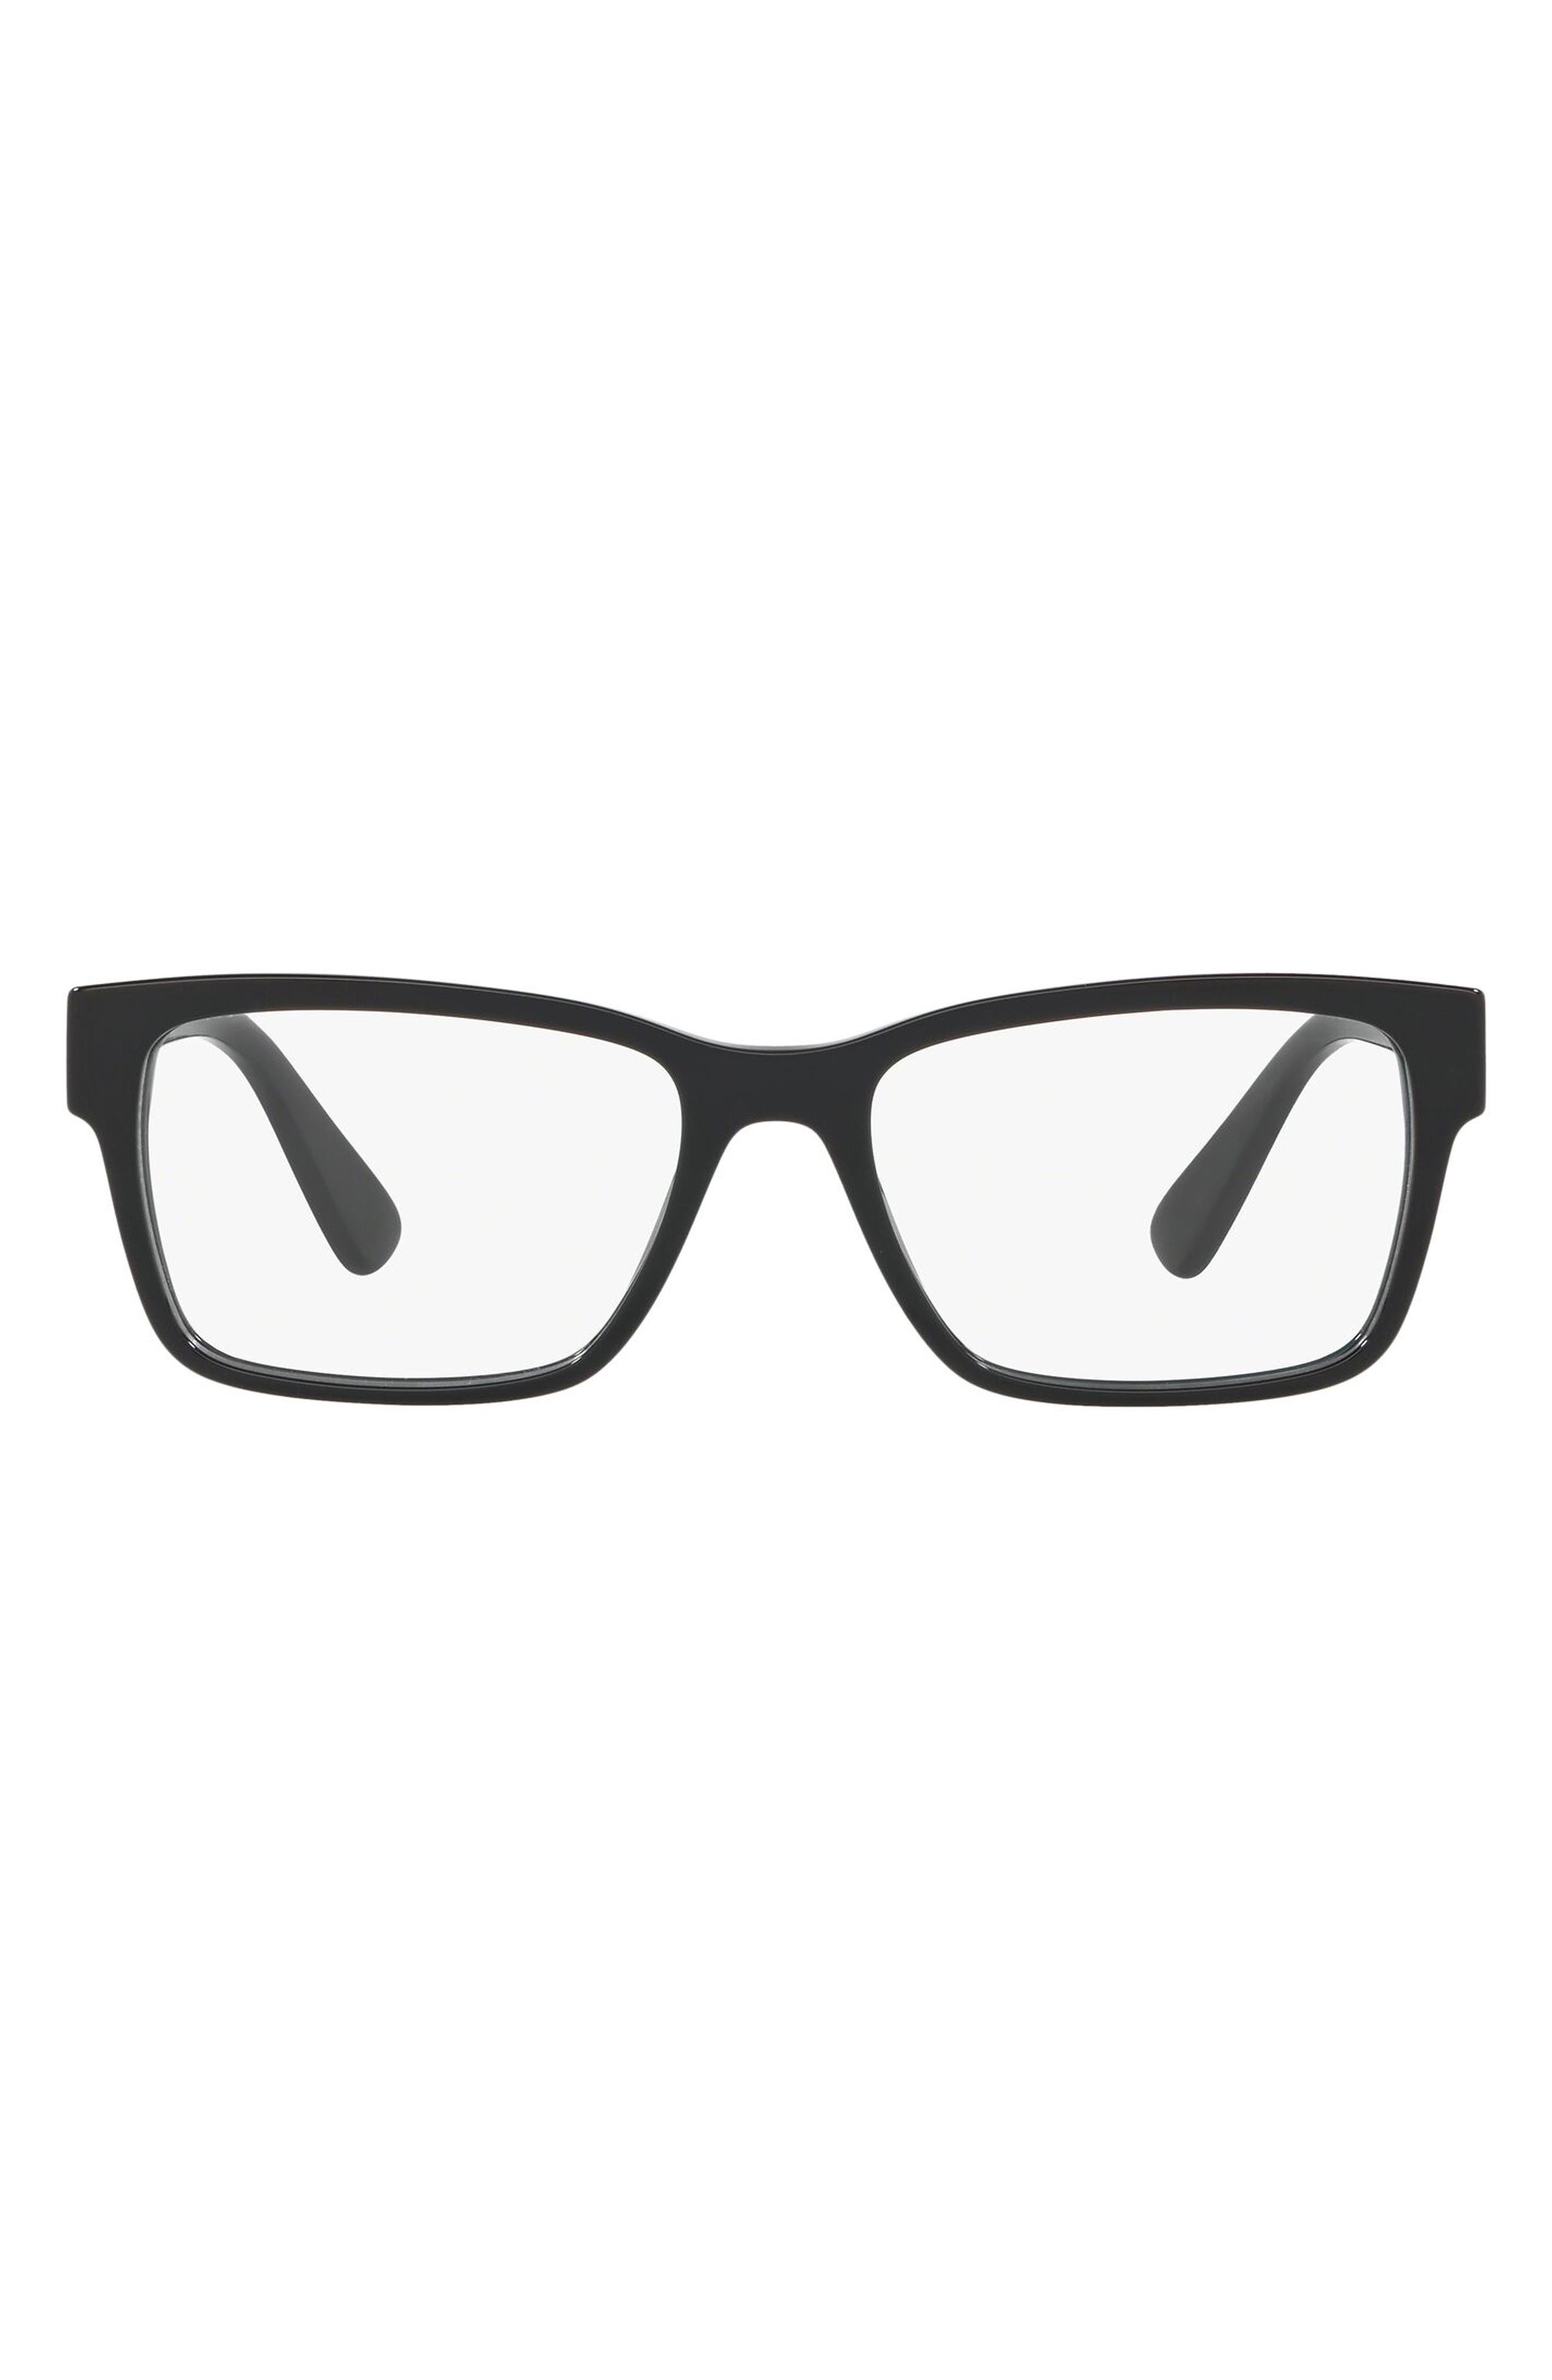 Prada 55mm Rectangle Optical Glasses in Black at Nordstrom